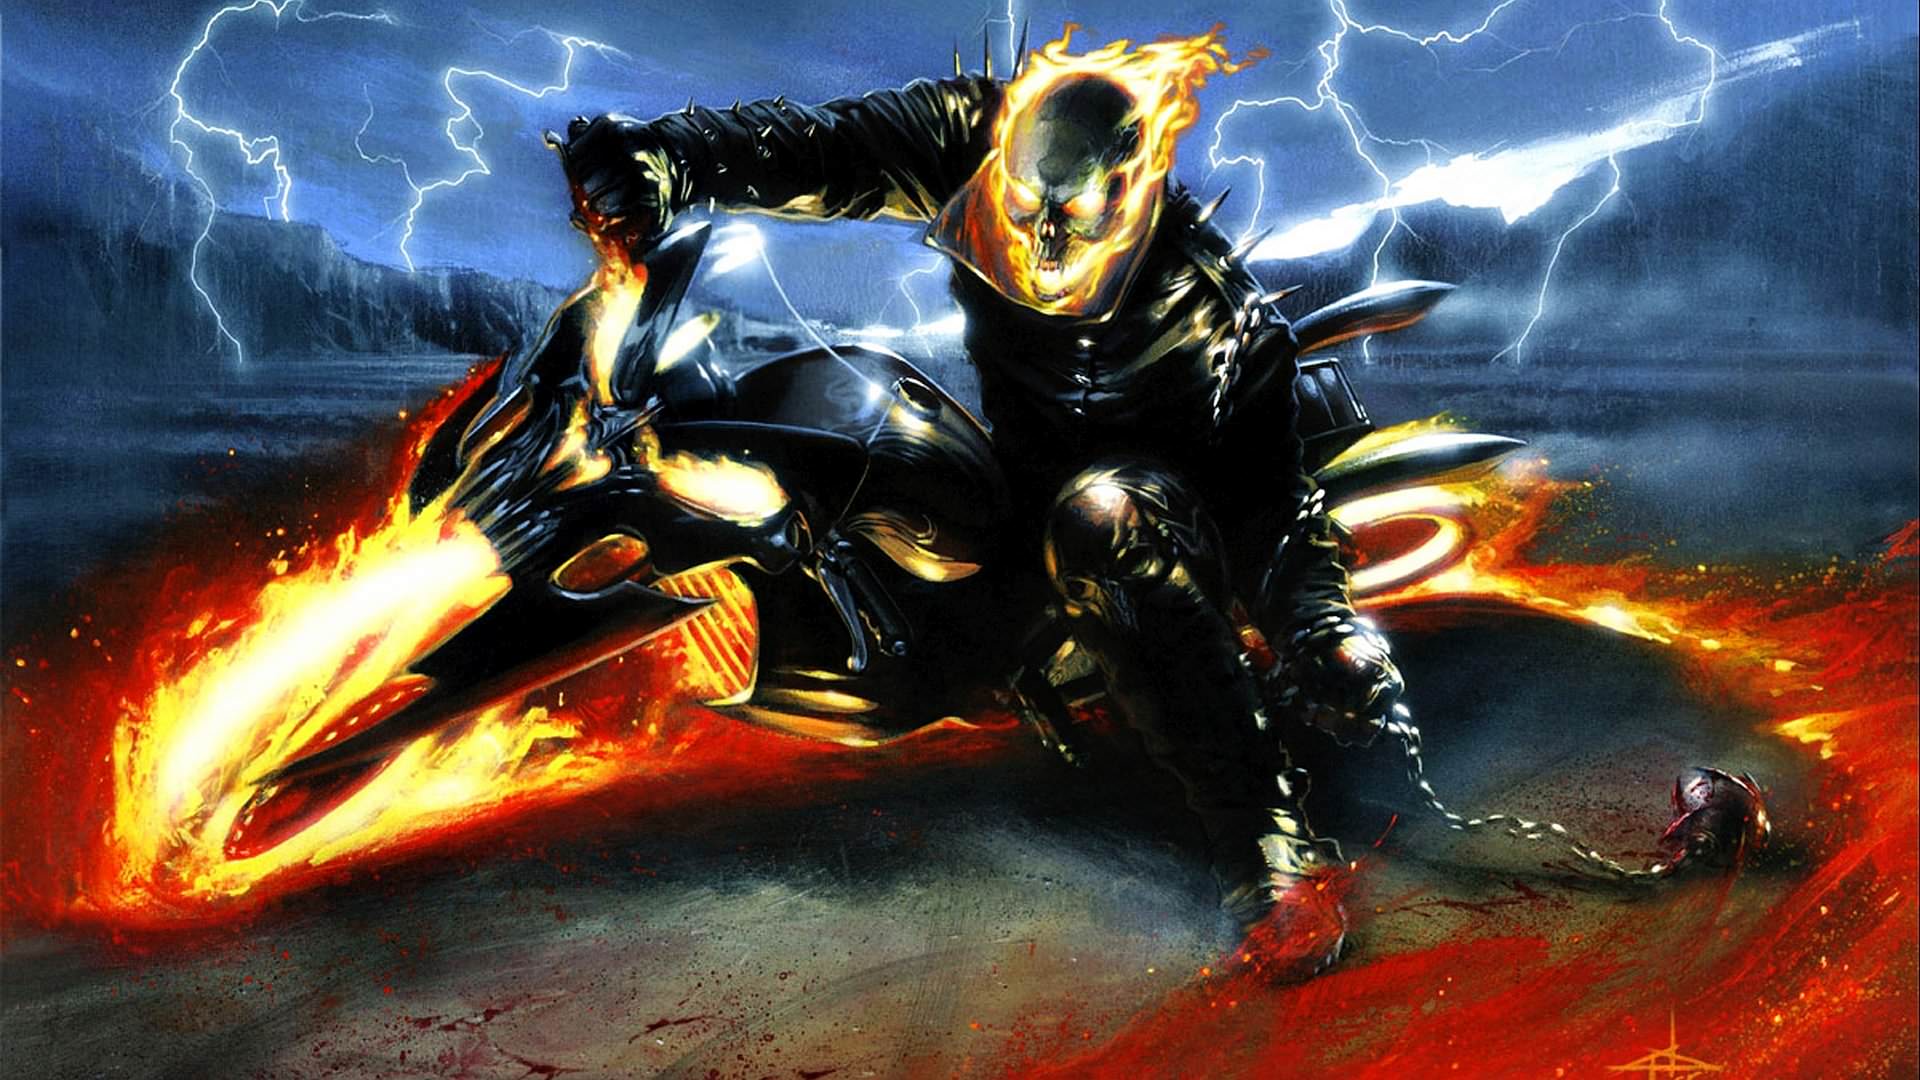 Ghost Rider wallpaper 1920x1080 Full HD (1080p) desktop background